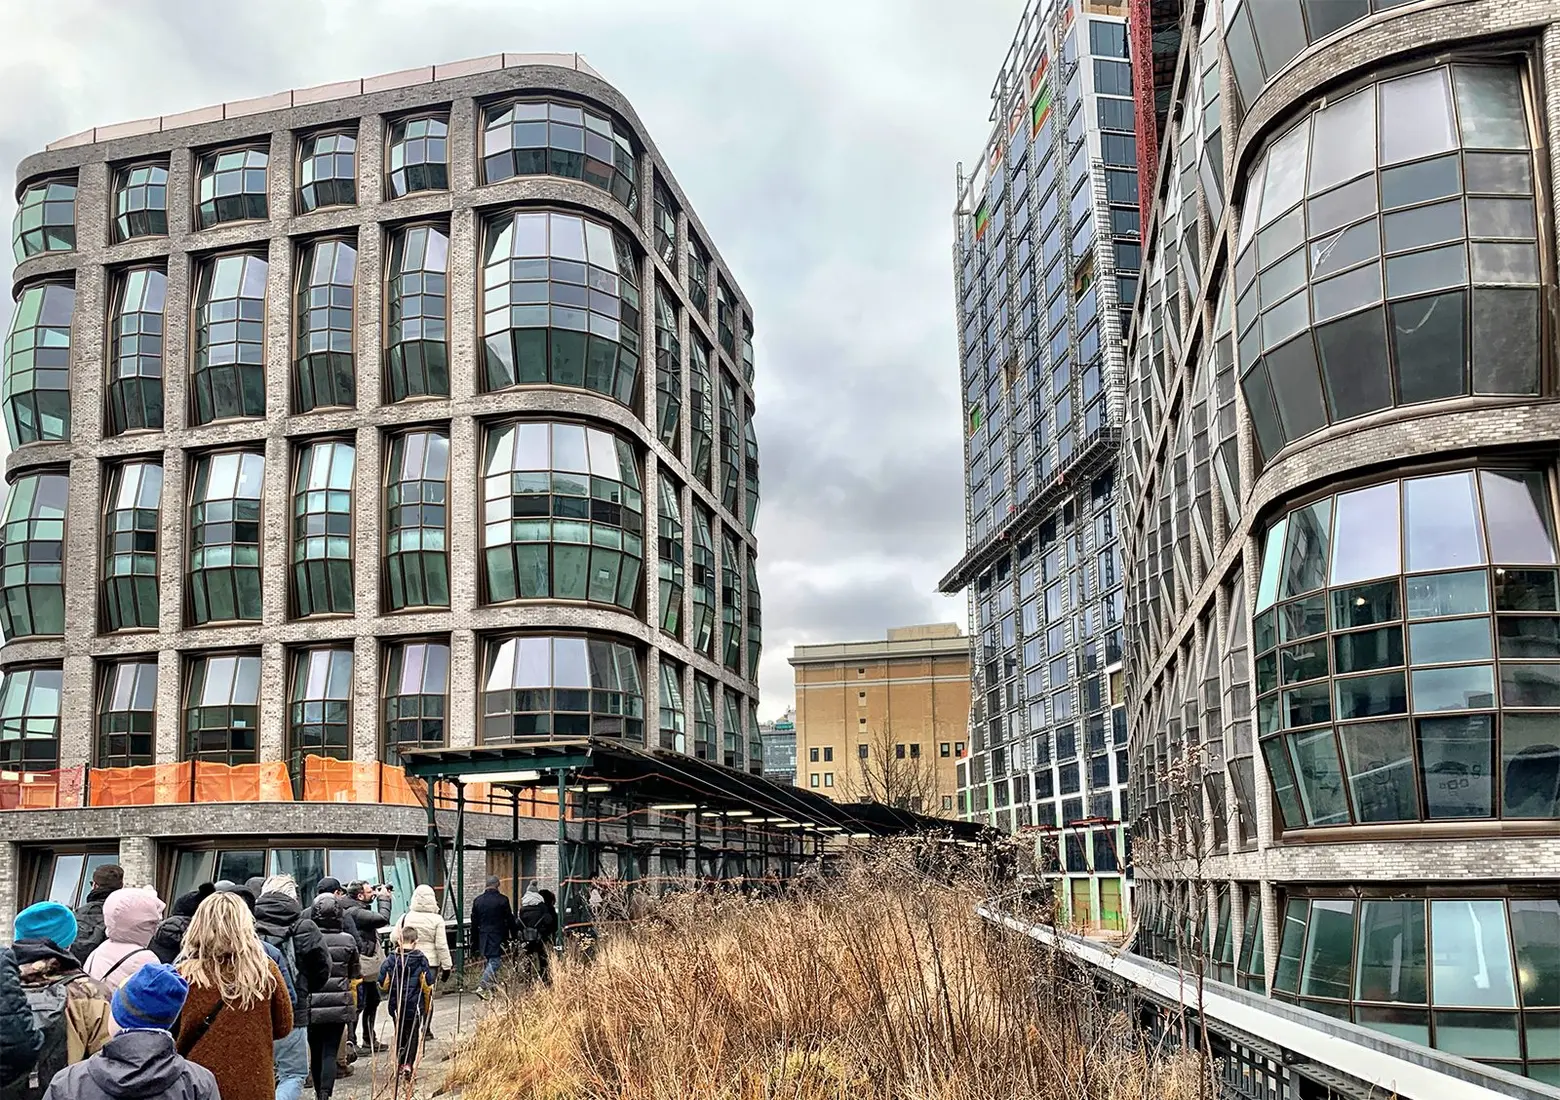 Lantern House, Thomas Heatherwick’s quirky High Line condo, rises and reveals residences